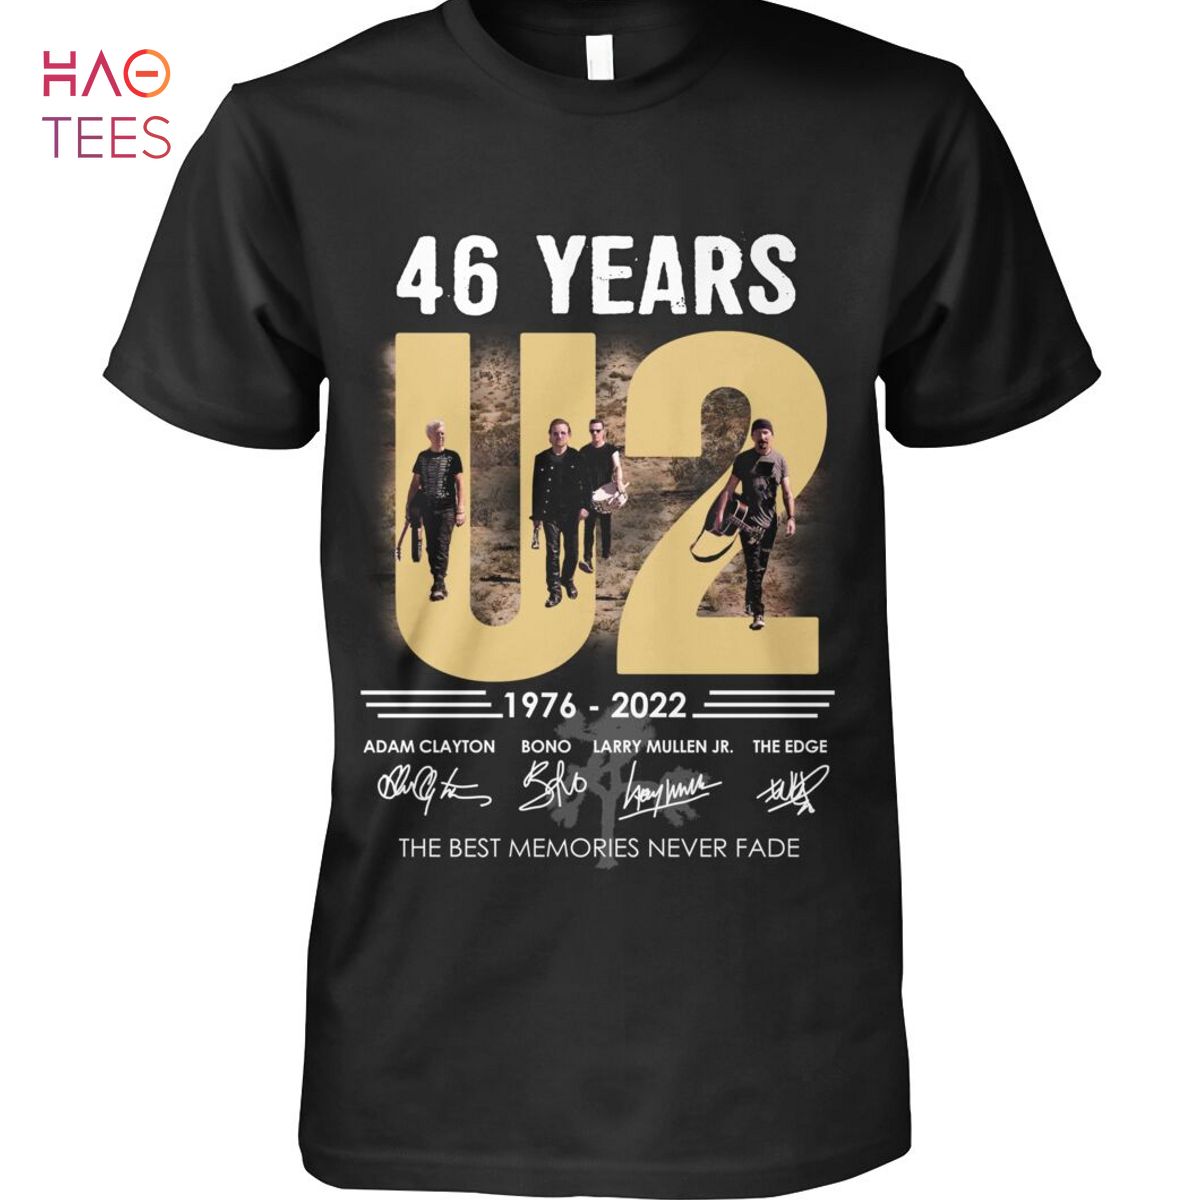 46 Years U2 1976-2022 Shirt Limited Edition